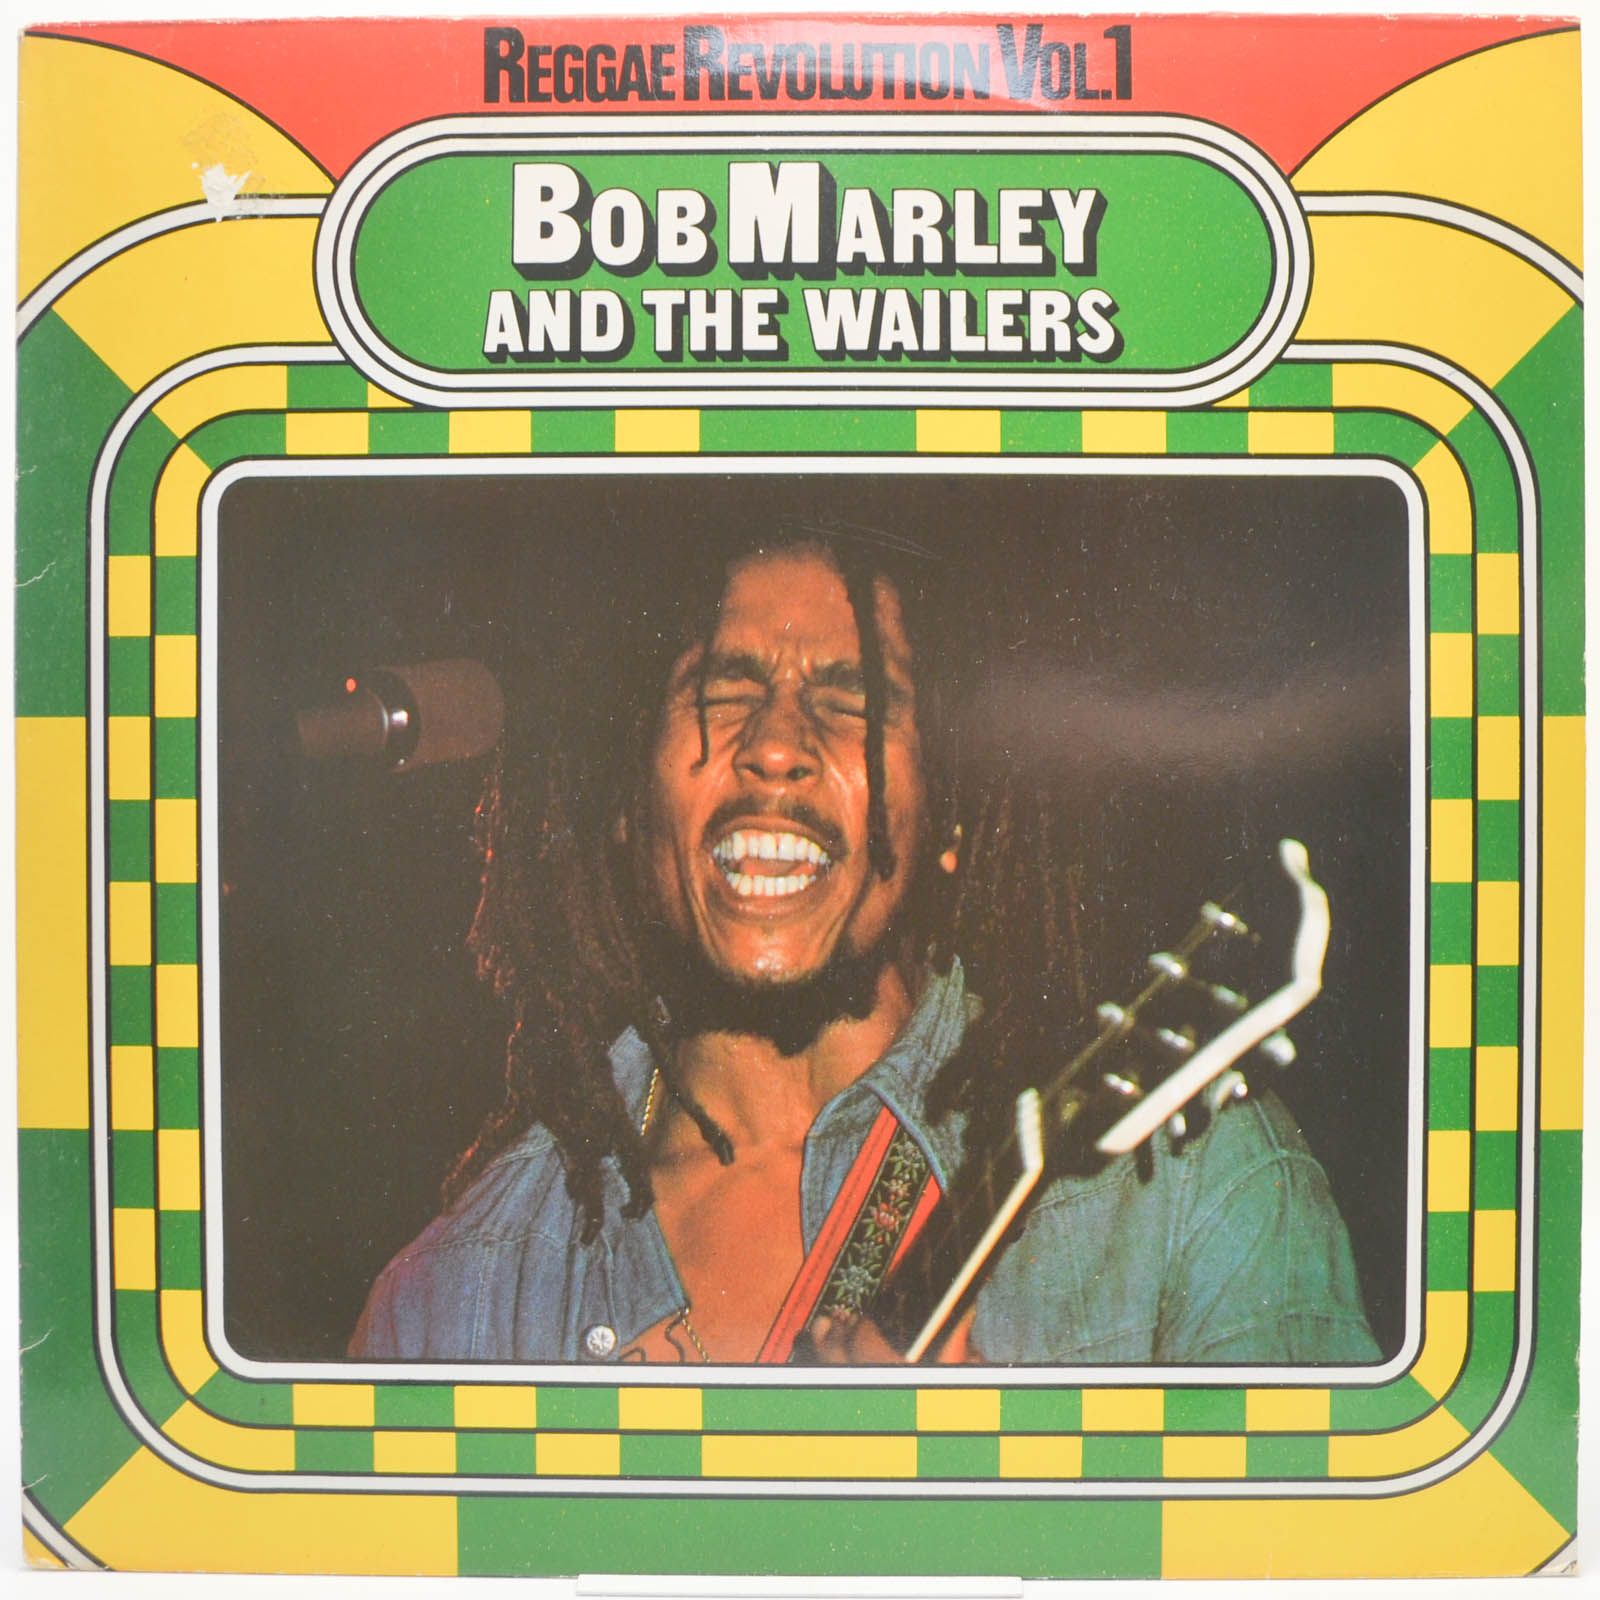 Bob Marley & The Wailers — Reggae Revolution Vol. 1, 1982